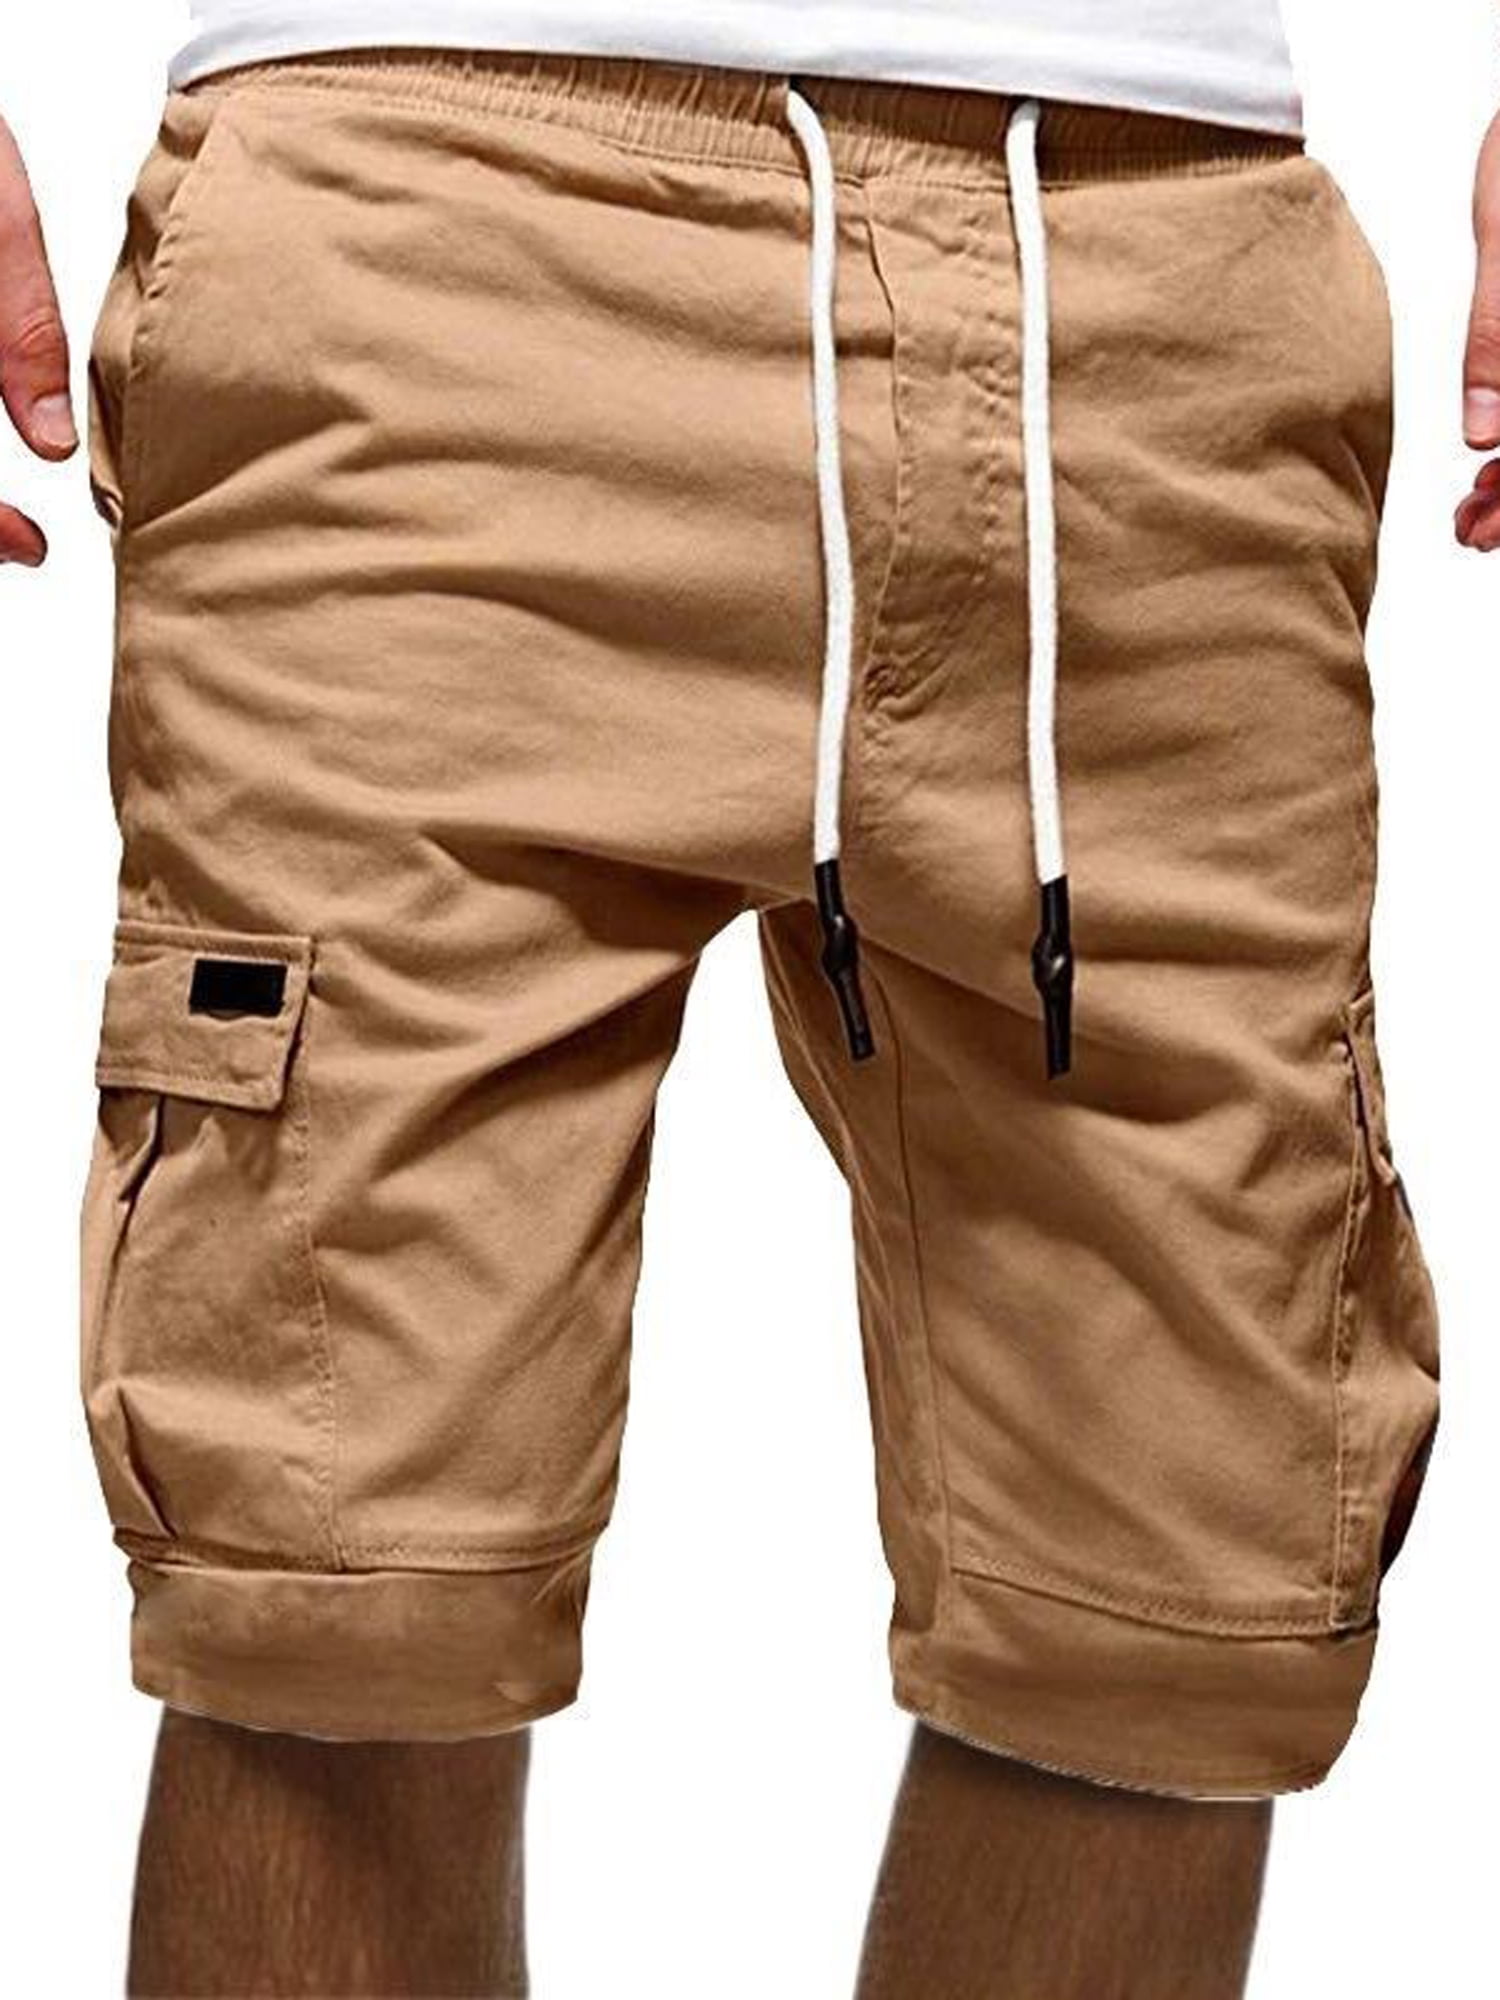 Farmerl Mens Casual Camouflage Multi Pocket Beach Short Trouser Cargo Shorts 